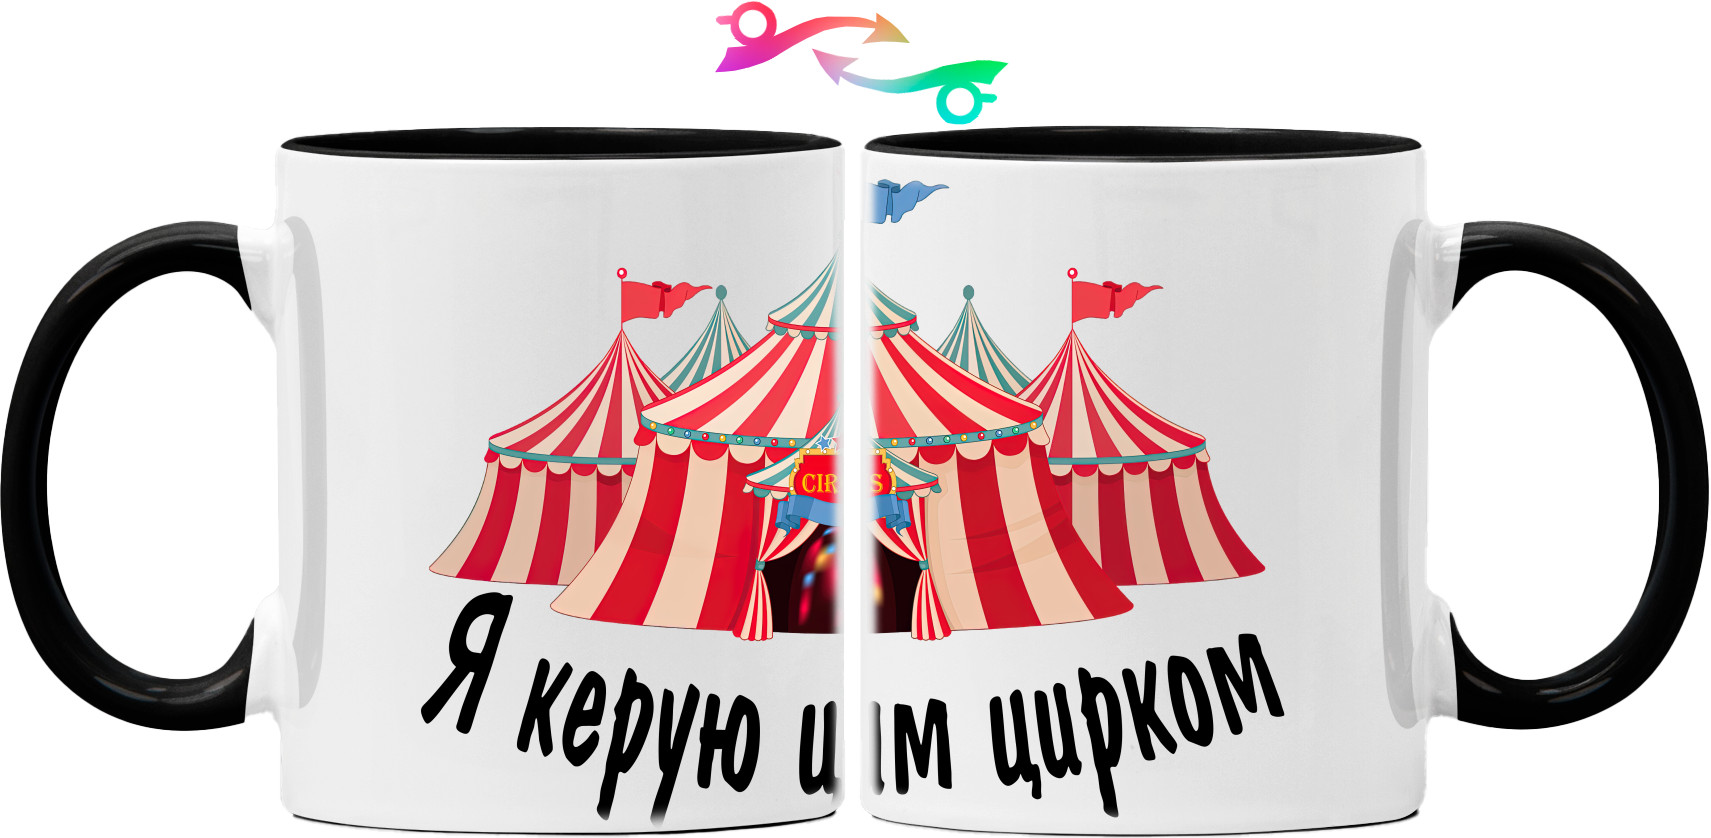 I run this circus 2